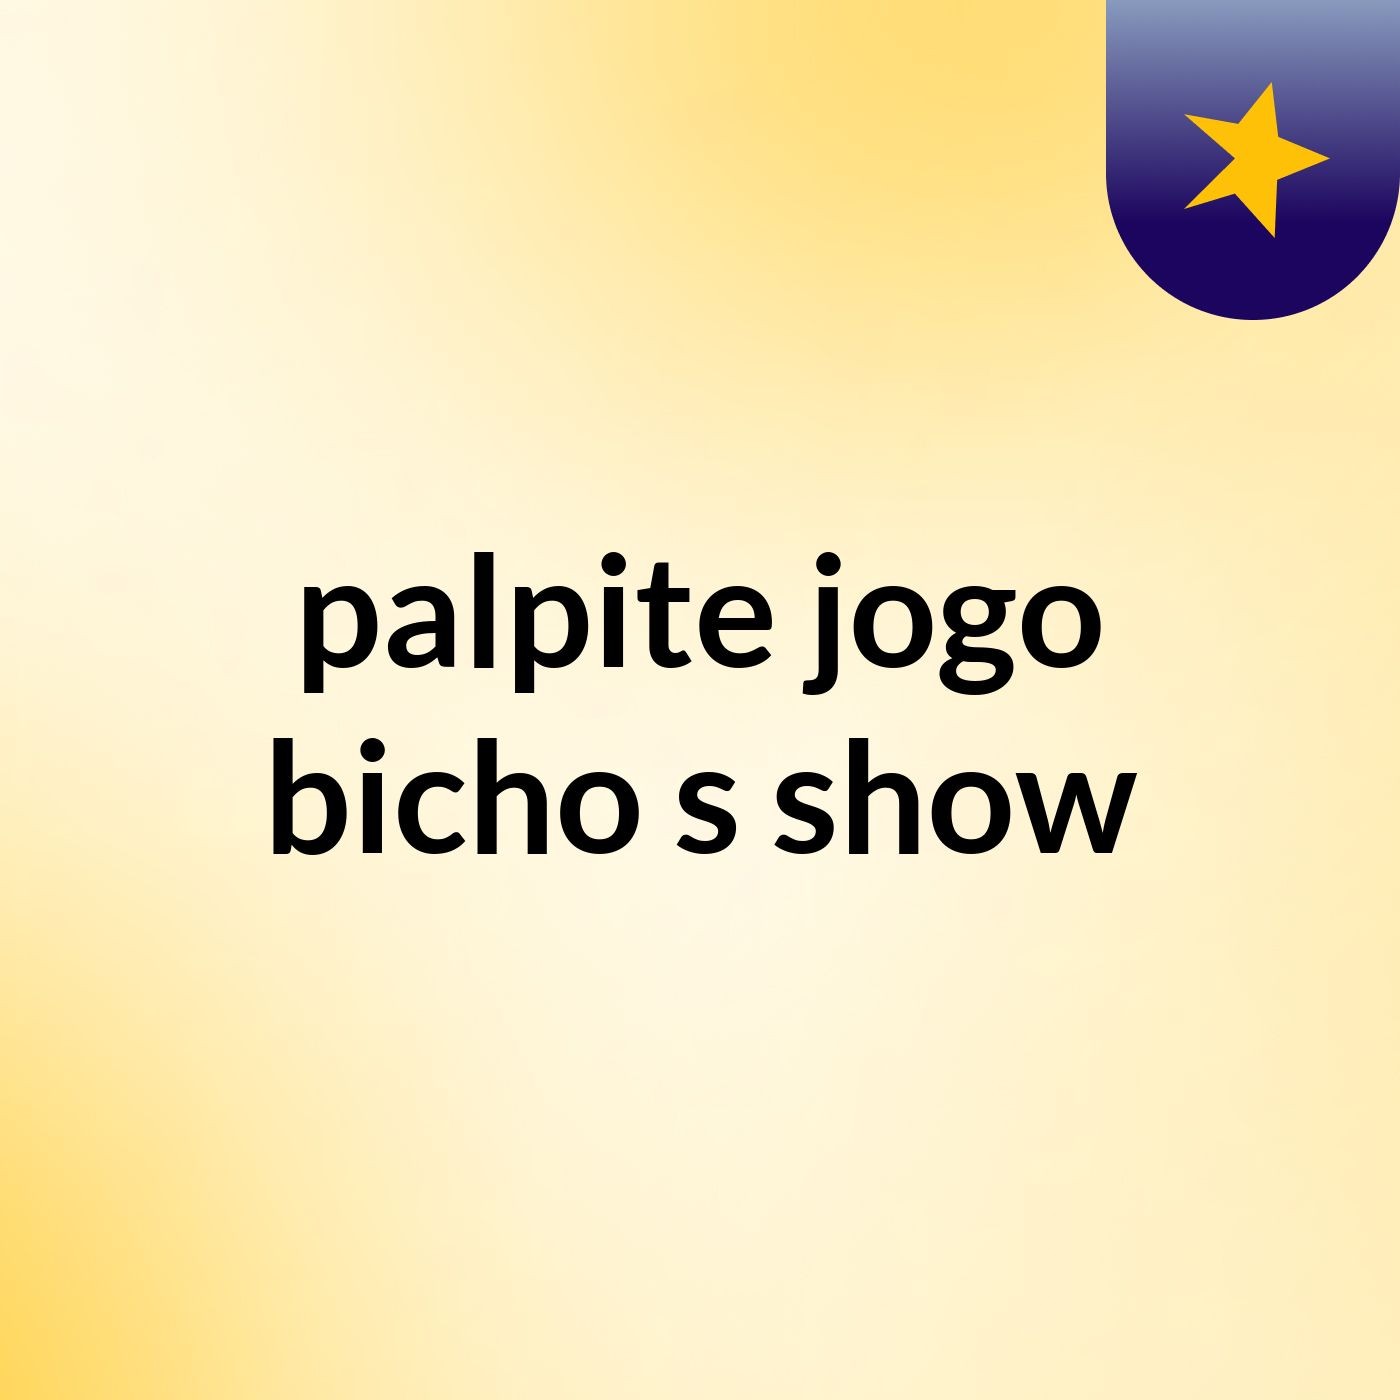 palpite jogo bicho's show